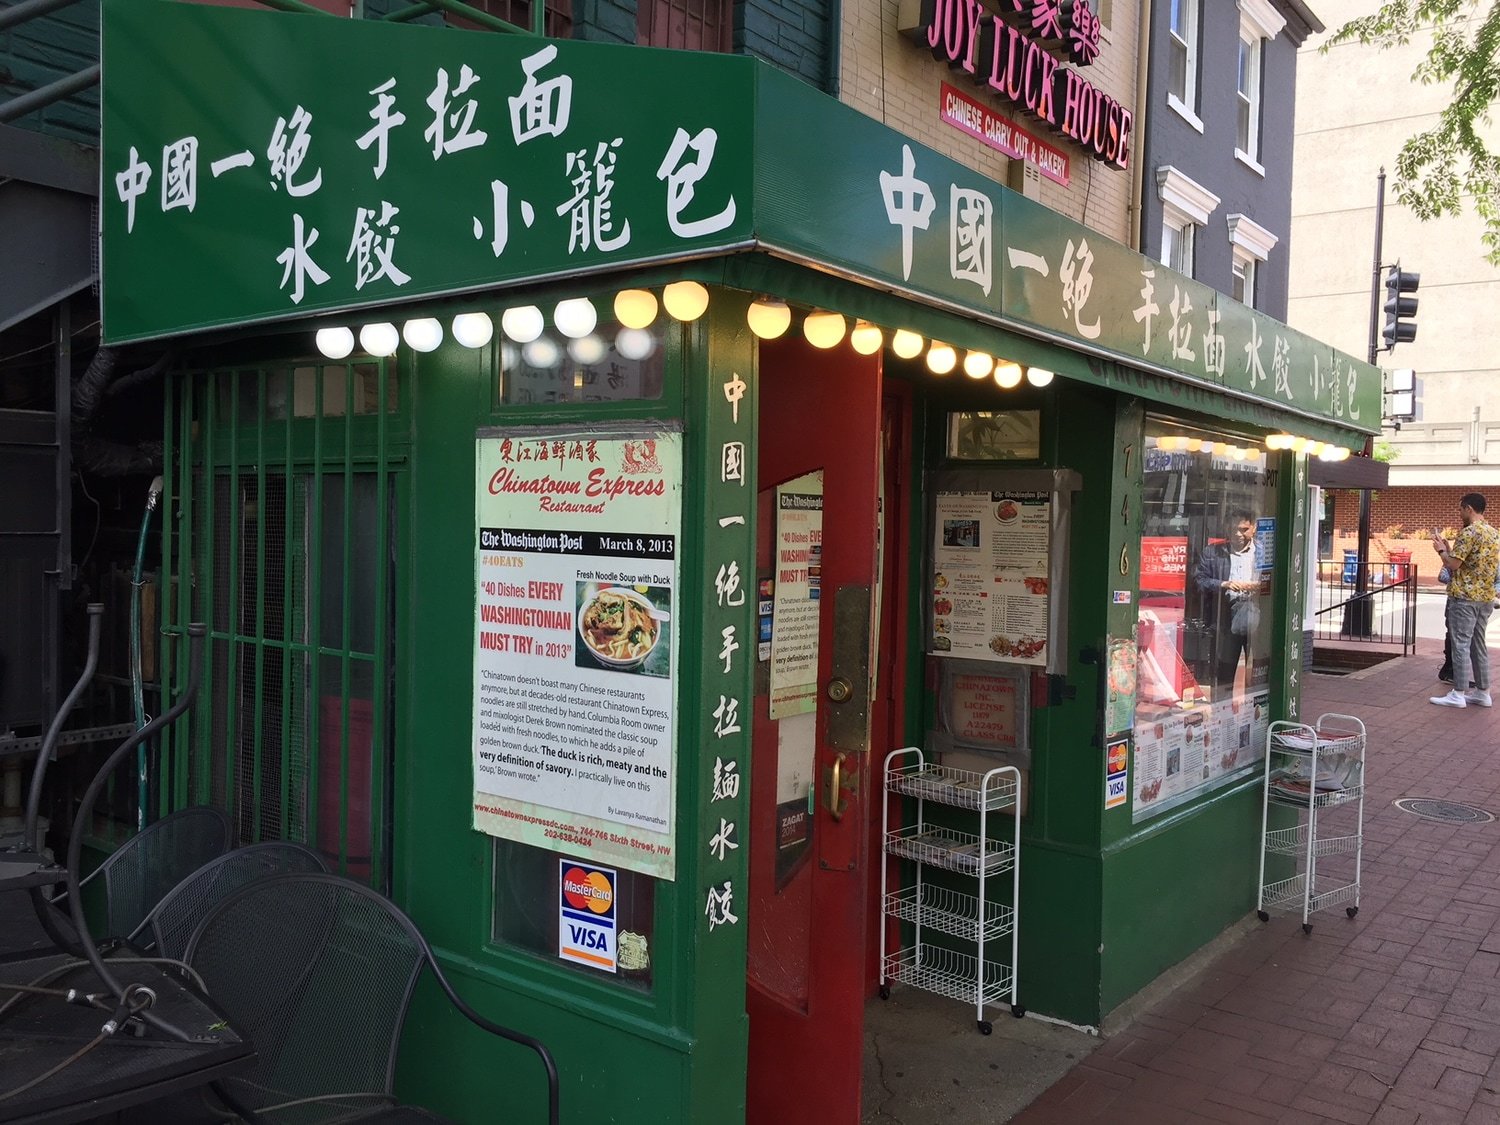 Chinatown Express Restaurant - Penn Quarter - Washington, DC